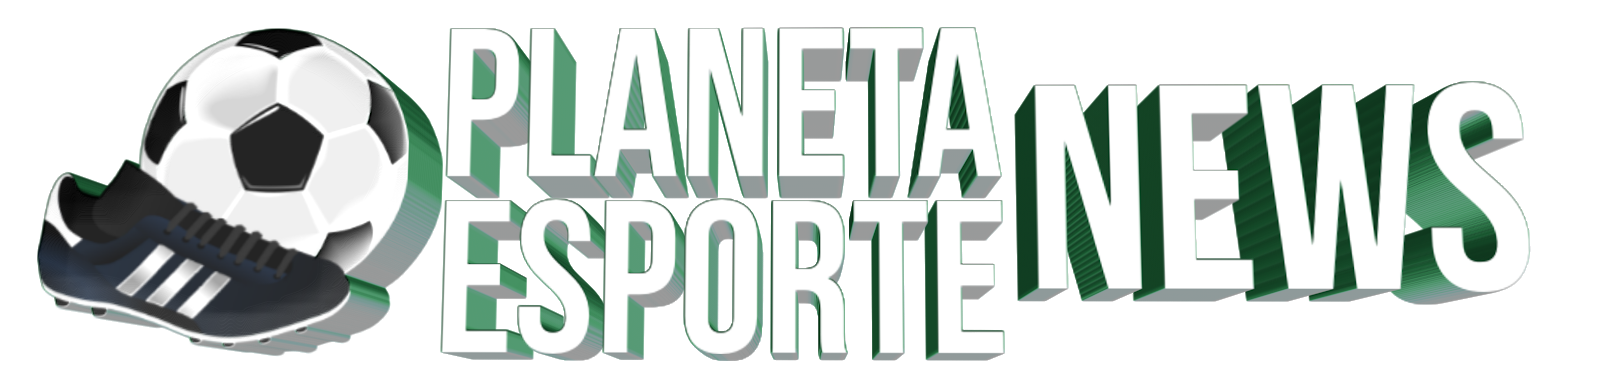 Planeta Esporte News